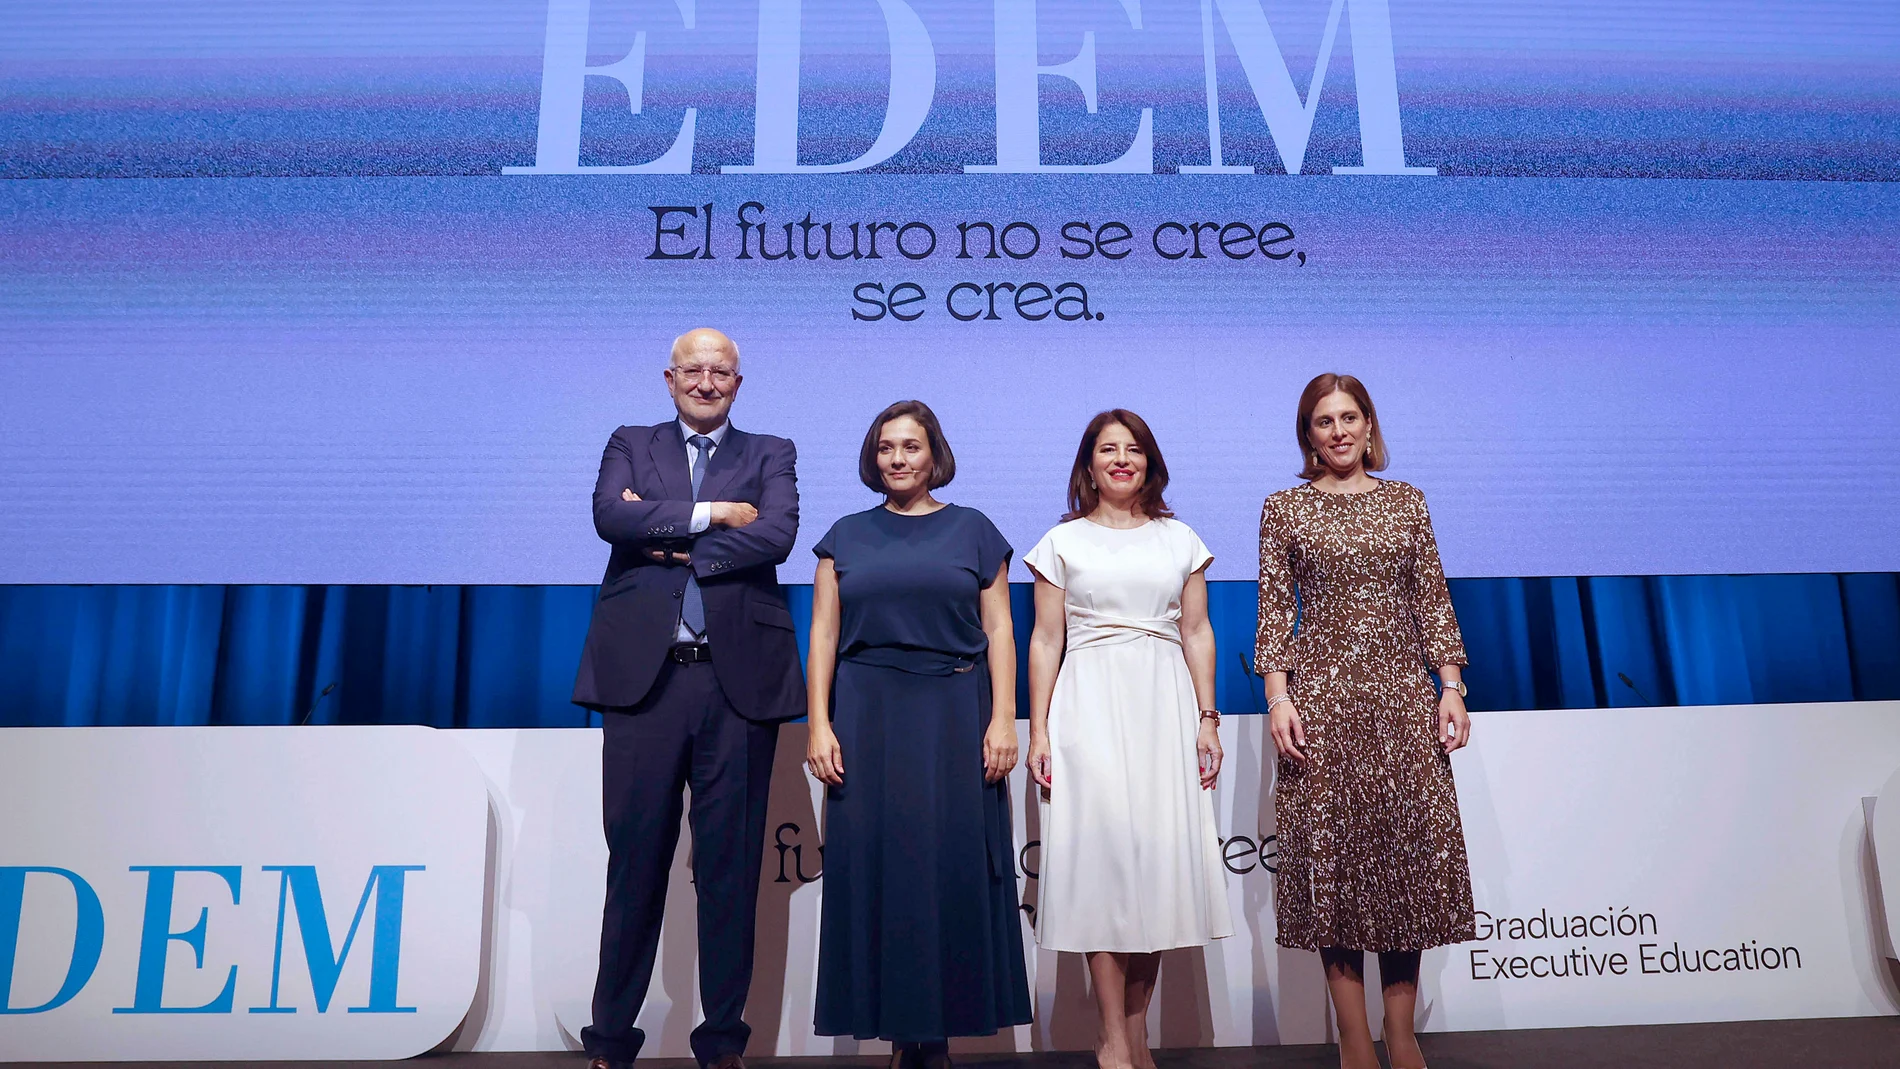 De izquierda a derecha: Juan Roig, presidente de honor de EDEM; Adriana Domínguez, presidenta ejecutiva de Adolfo Domínguez; Hortensia Roig, presidenta de EDEM; y Elena Fernández, directora general de EDEM